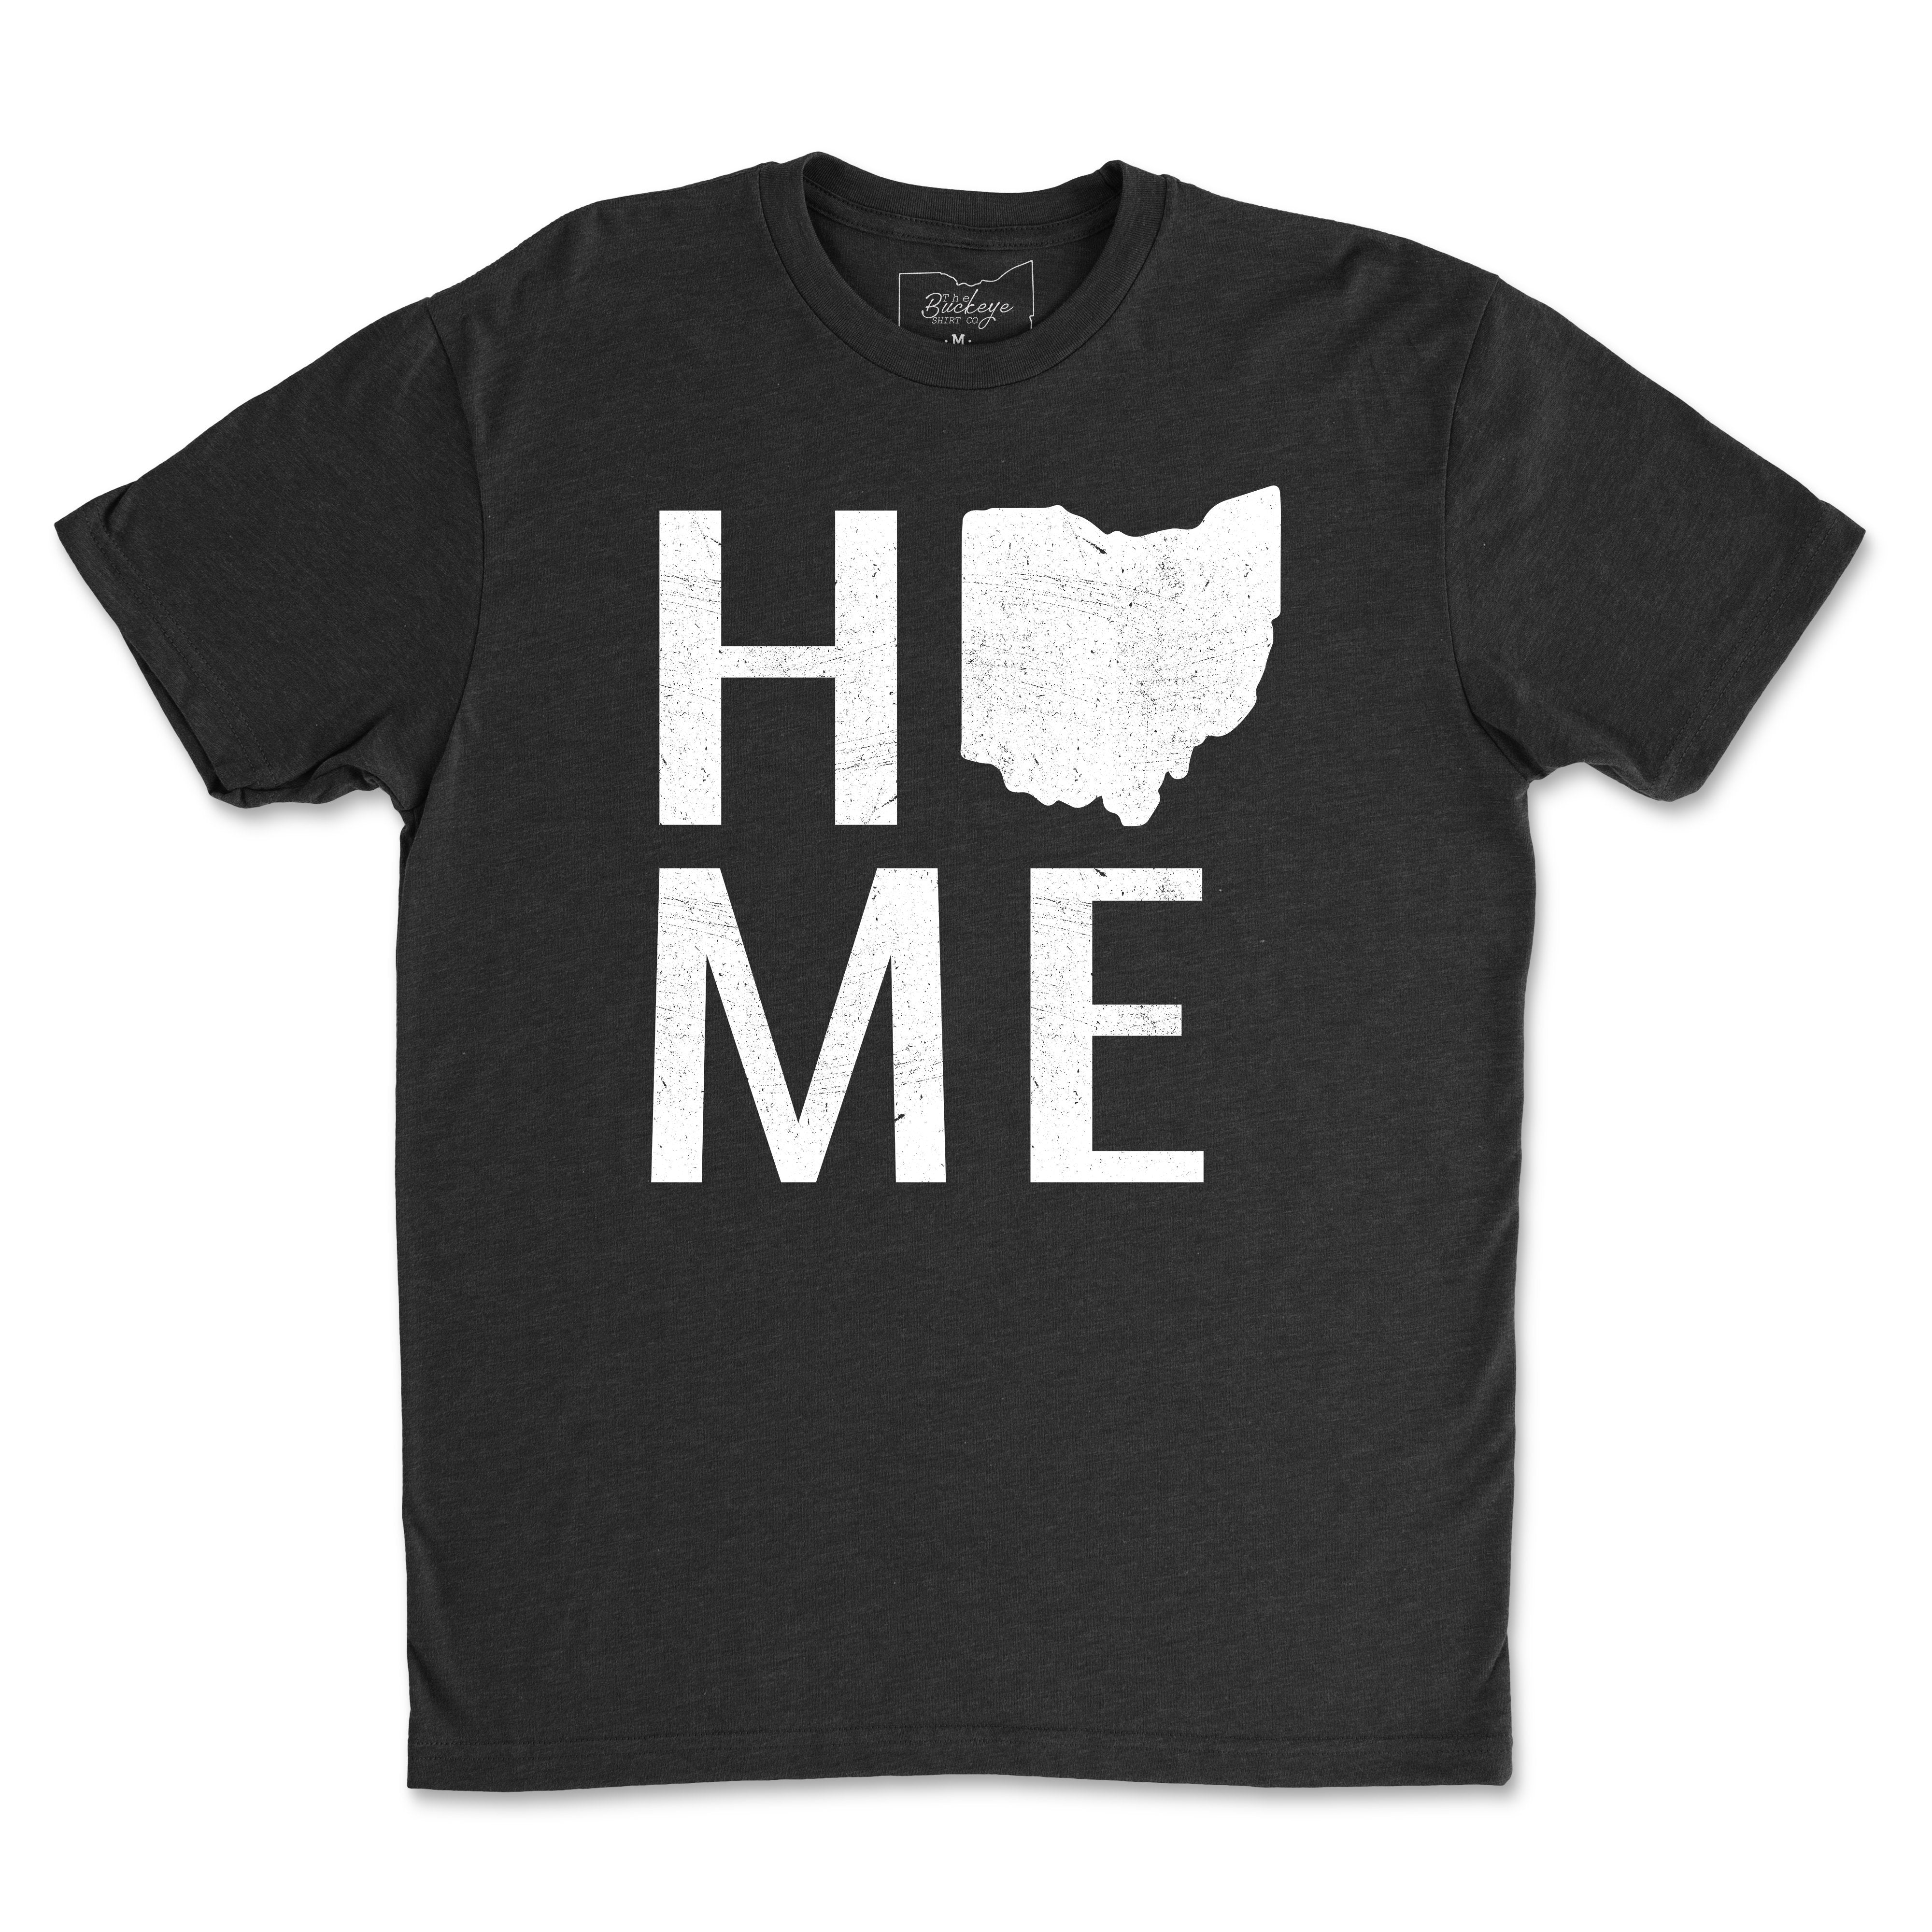 Distressed Ohio Home T-Shirt - Buckeye Shirt Co.